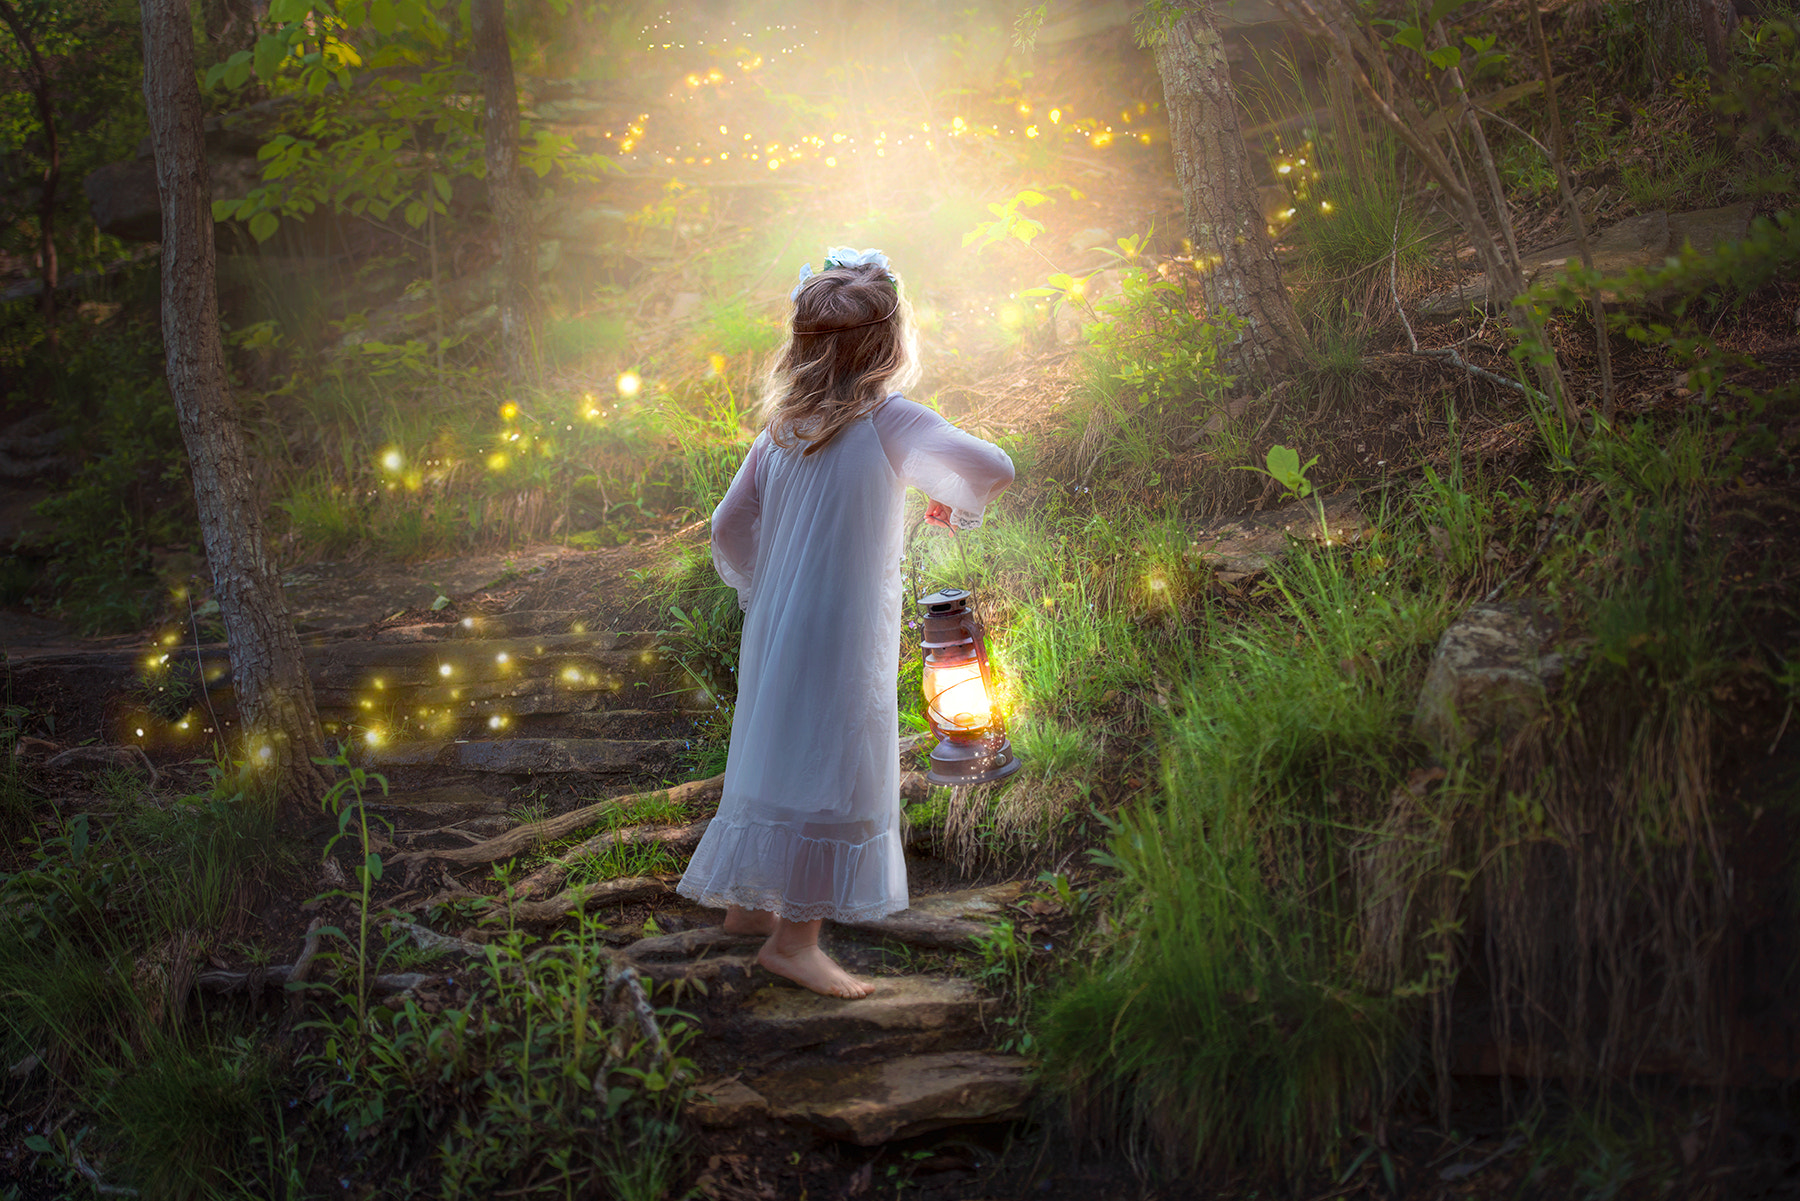 General 1800x1201 Jessica Drossin children blonde wind dress white clothing barefoot magic lantern forest bright